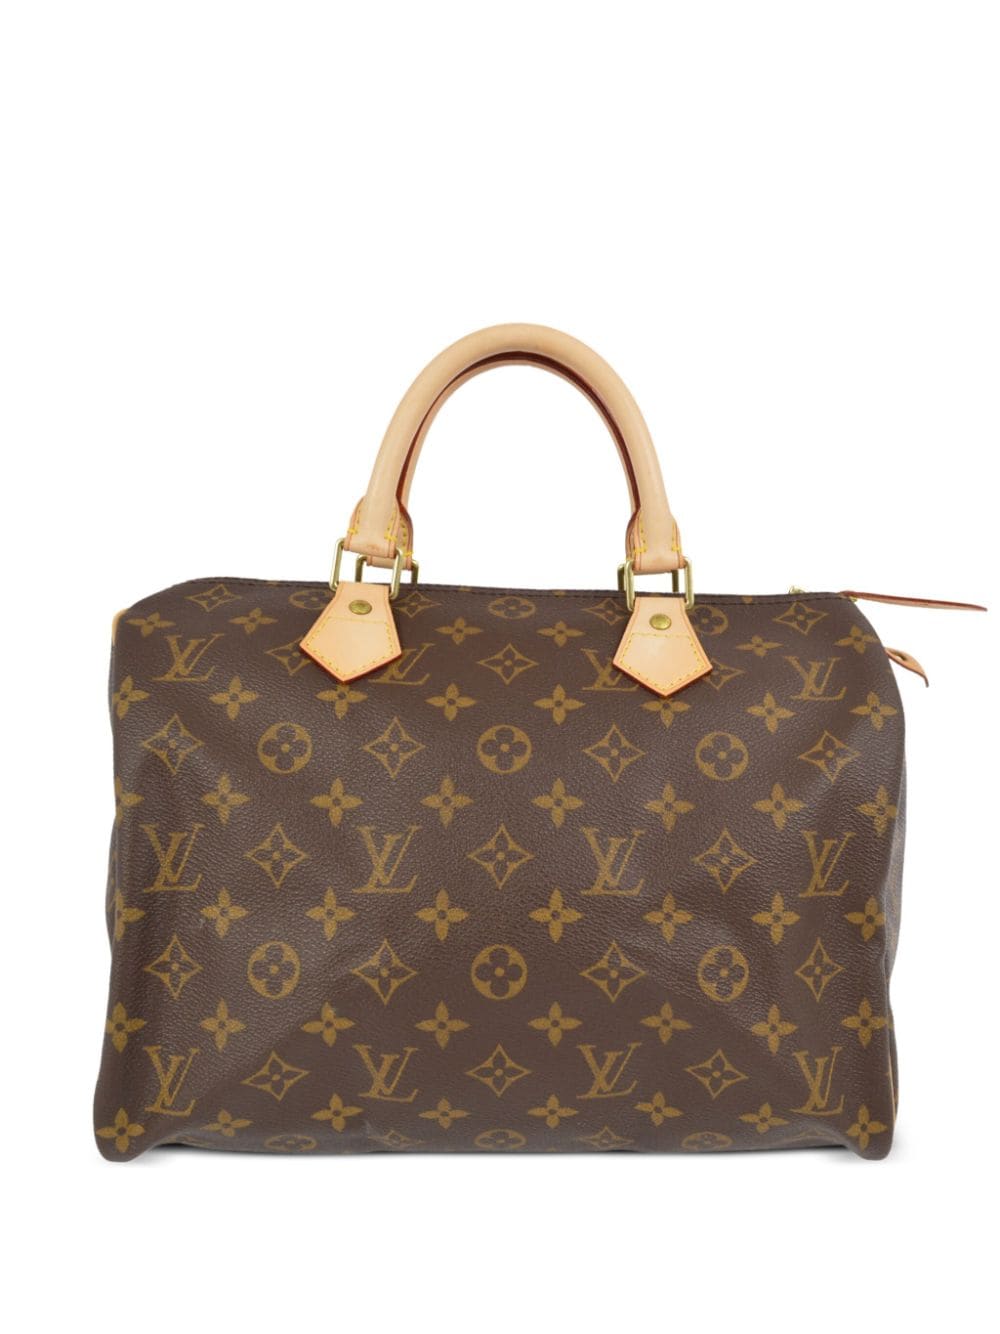 Pre-owned Louis Vuitton 2006 Speedy 30 Handbag In Brown